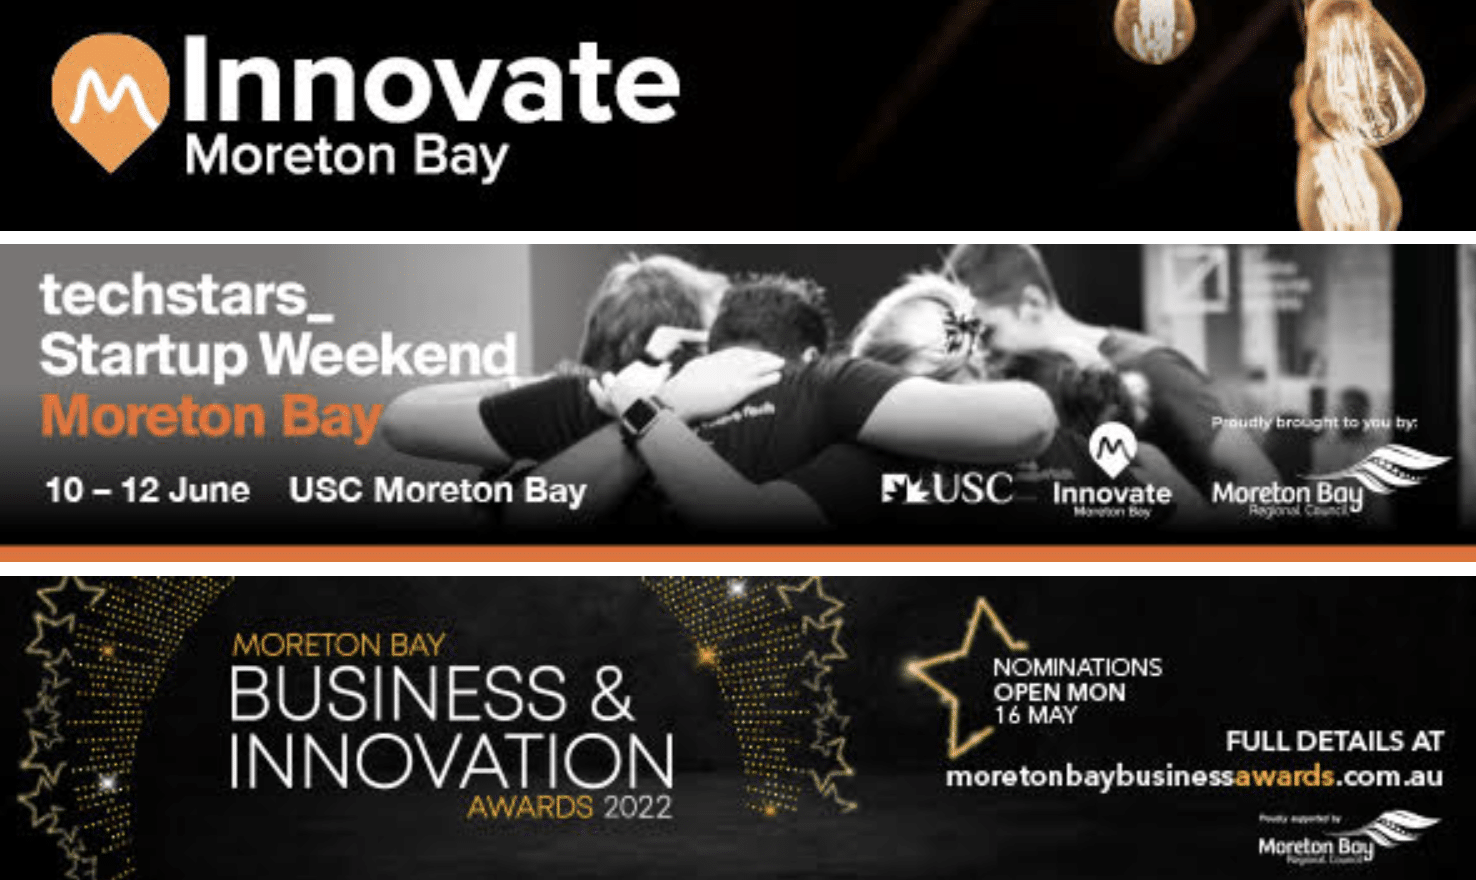 Techstars Startup Weekend Moreton Bay / 10-12 June @ USC Moreton Bay